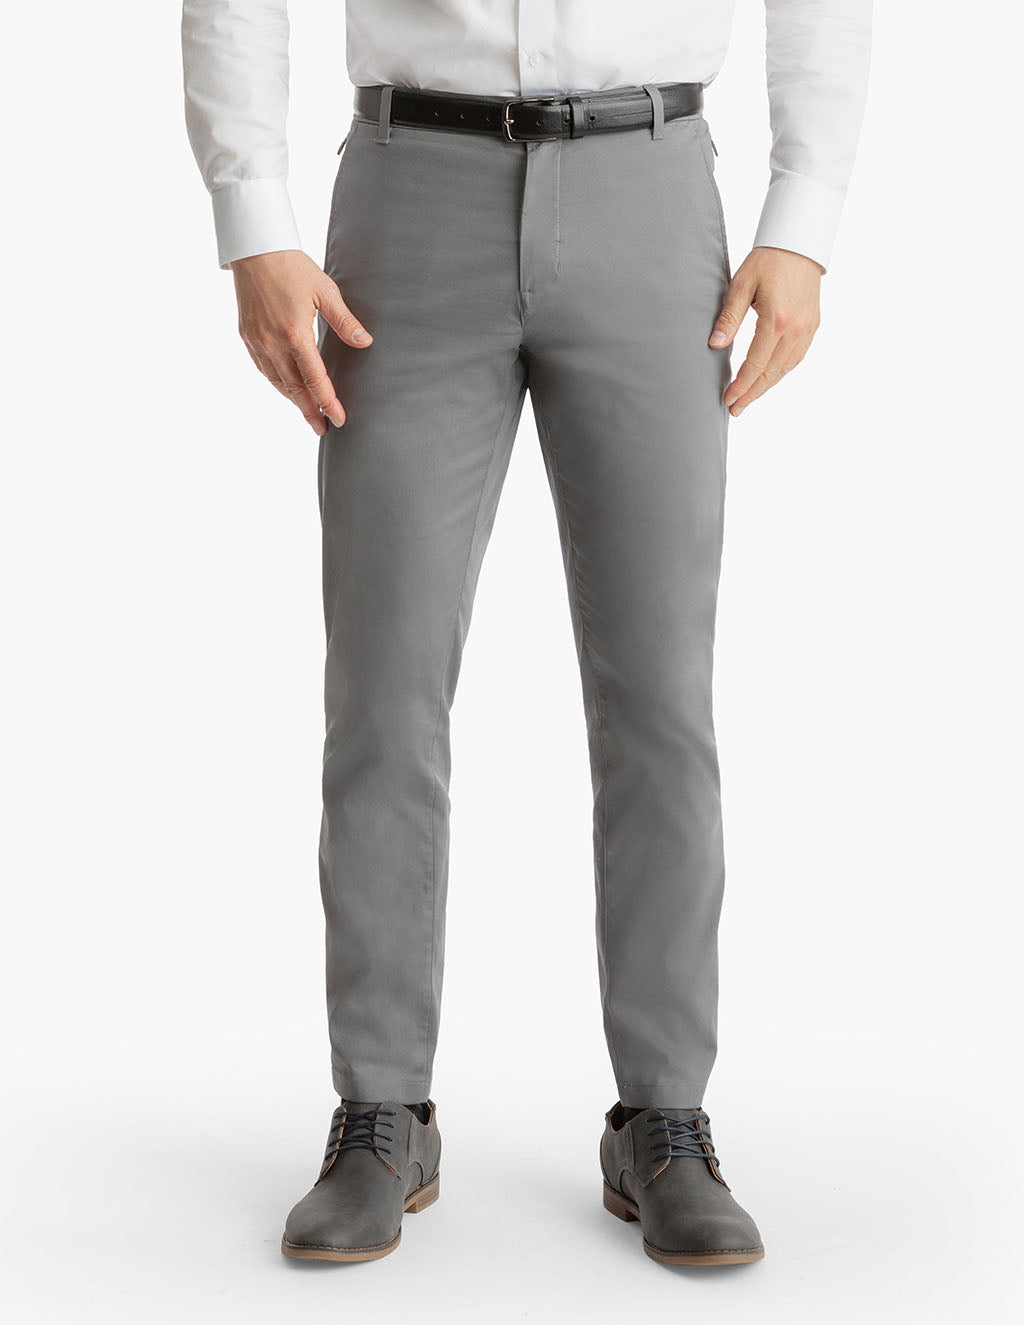 Lululemon City Sleek Slim-Fit 5 Pocket High-Rise Pant, Golf Equipment:  Clubs, Balls, Bags